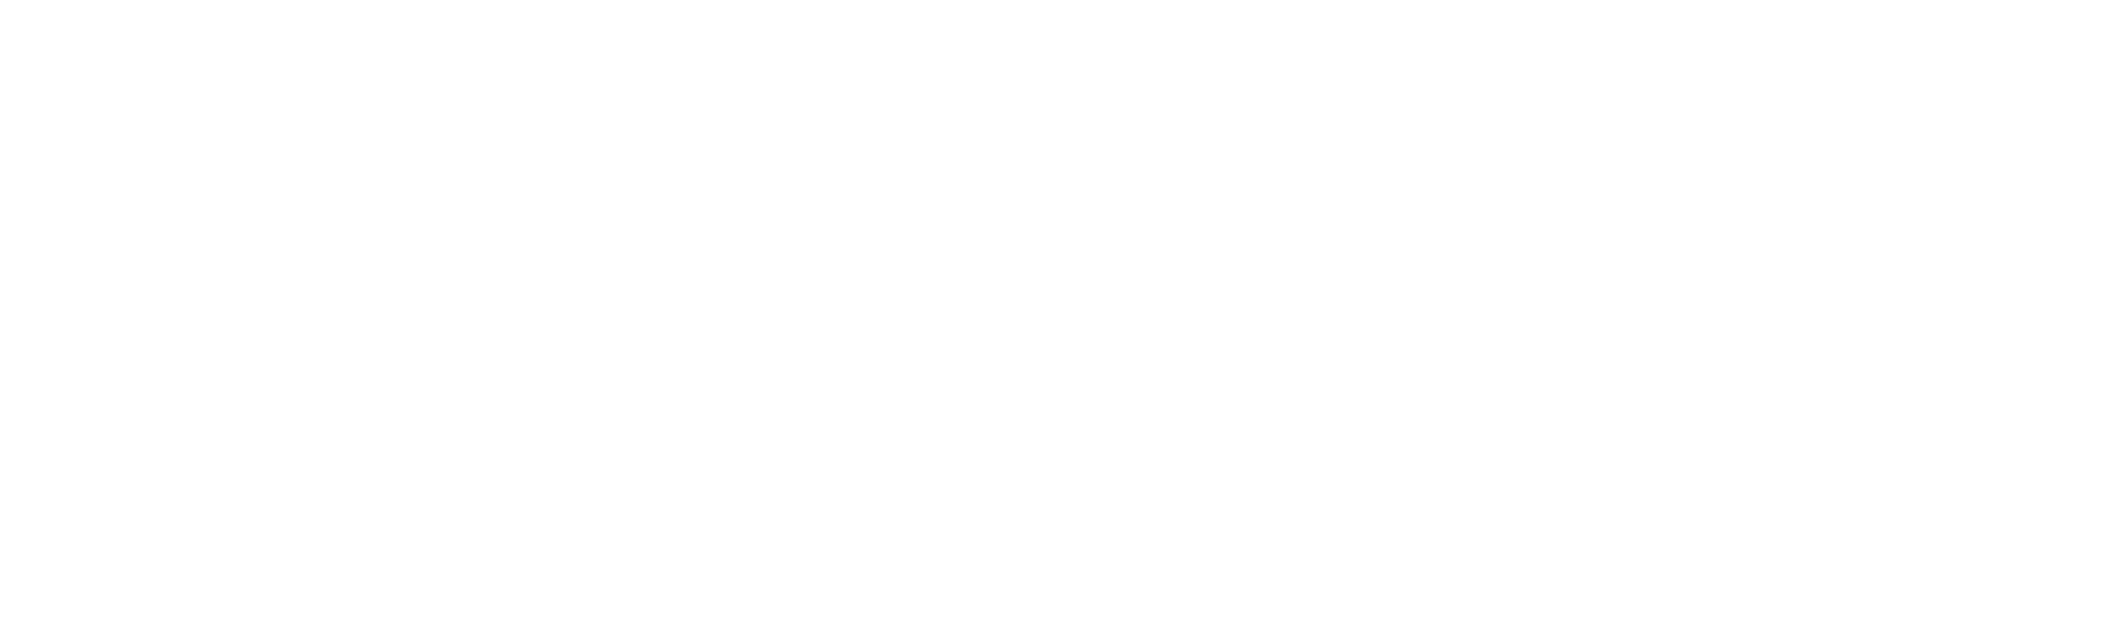 Eric Fortenberry Dallas Innovates 2024 Awards Finalist